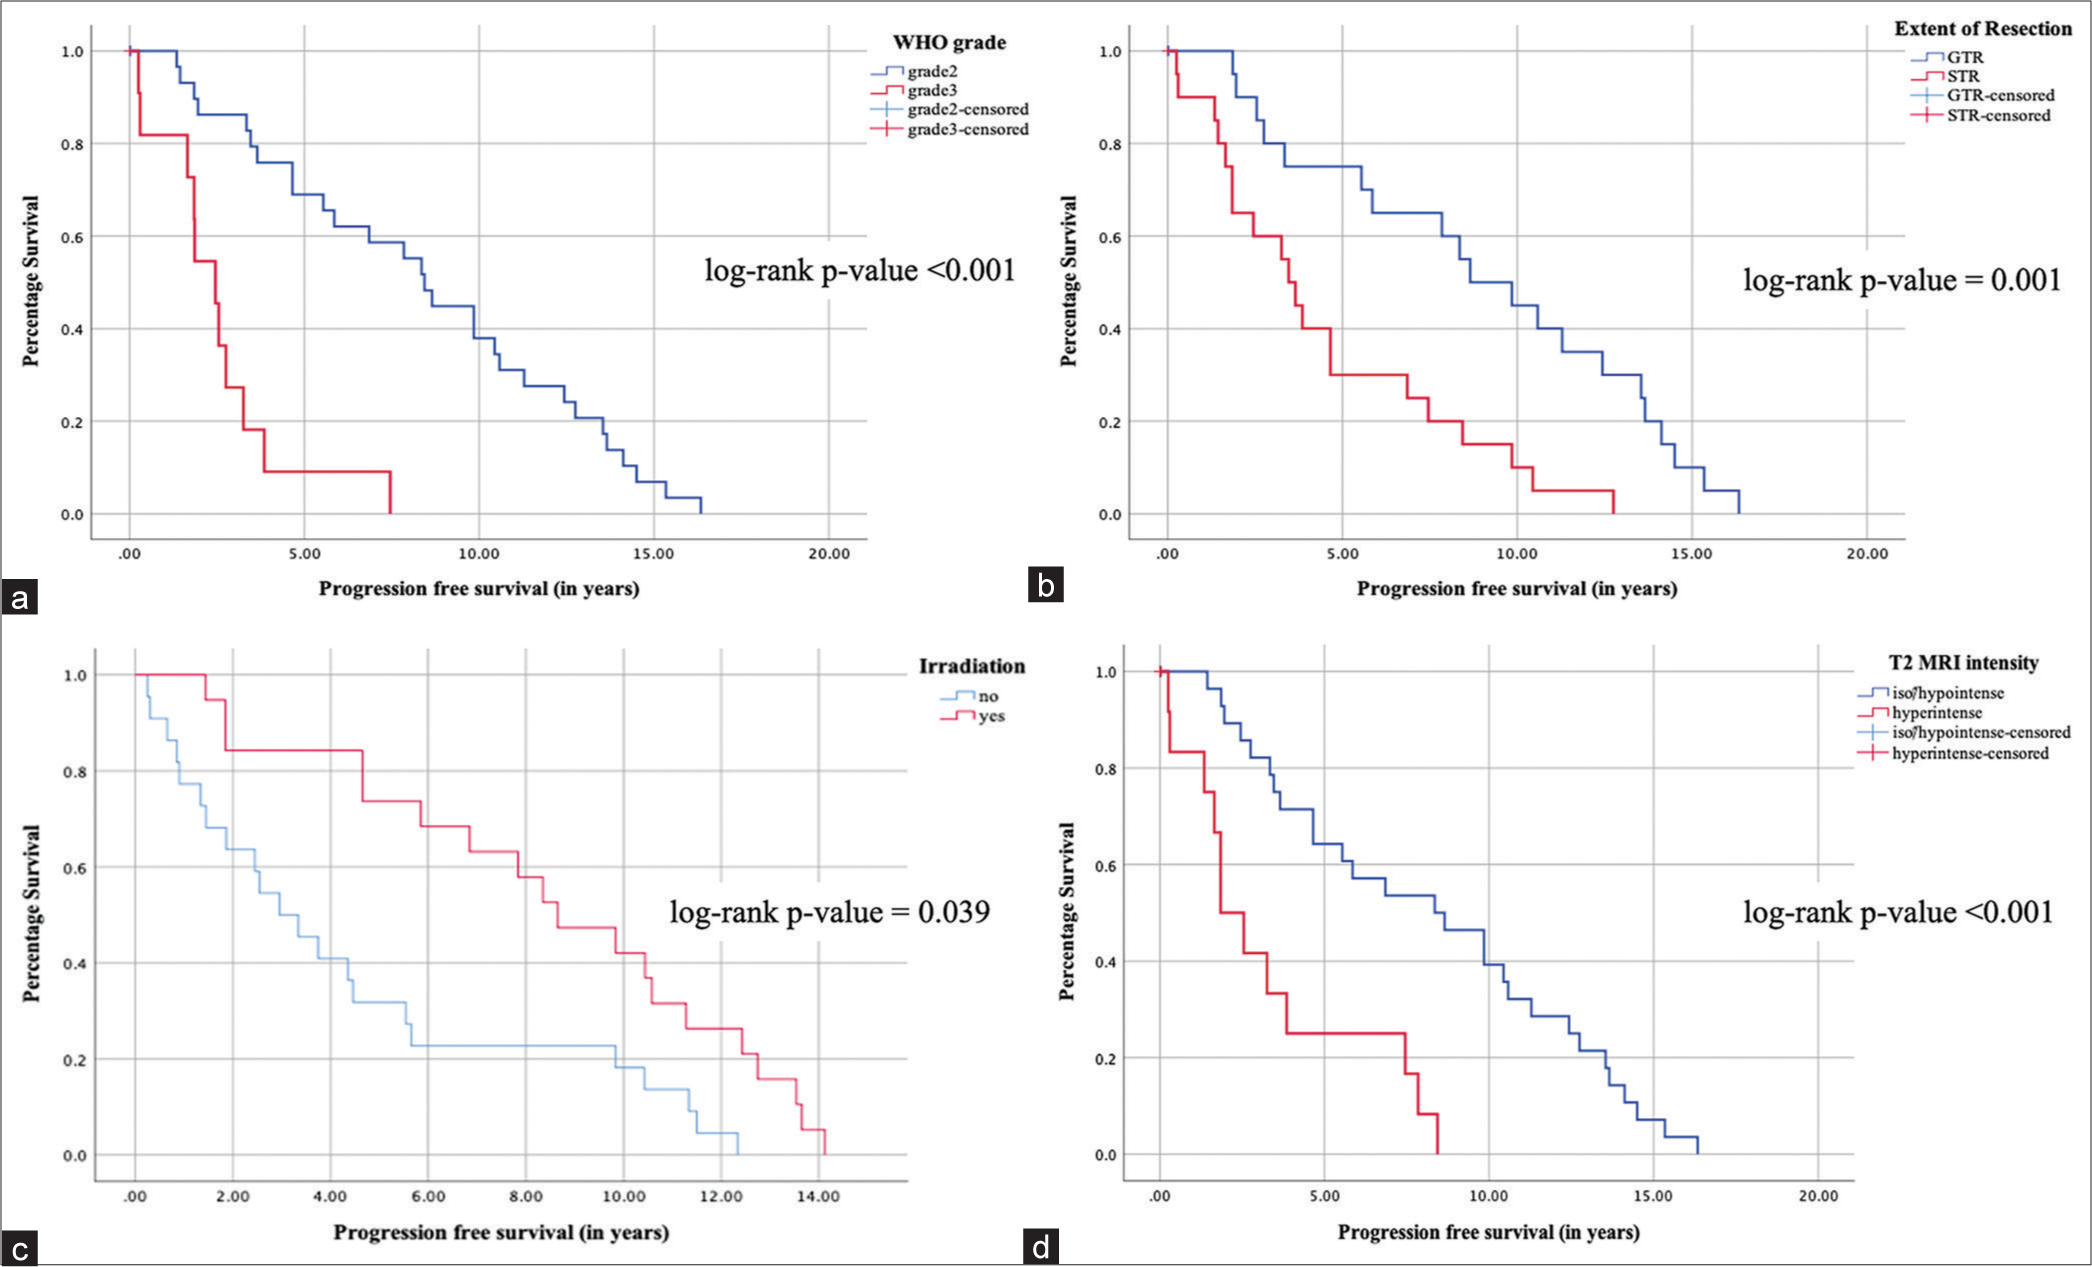 Selected Kaplan–Meier plots of progression-free survival (PFS) for high-grade meningiomas. In cumulative analyses, (a) median PFS was 8.43 years (95% confidence interval [CI] = 7.0–9.85 years) with grade 2 meningiomas and 2.45 years (95% CI = 1.69–3.2 years) with grade 3 meningiomas, (b) the median PFS was 8.65 years (95% CI = 5.38–11.9 years) after gross total resection and 3.46 years (95% CI = 2.58–4.33 years) after subtotal resection, (c) the median PFS after surgery and adjuvant irradiation was longer, 8.65 years (95% CI = 5.8–11.5 years) than after surgery alone 3.34 years (95% CI = 2.27–4.4 years), and (d) the median PFS for iso/hypointense lesion was 8.35 years (95% CI = 4.21–12.48 years) while that of hyperintense lesion was 1.84 years (95% CI = 0.83–2.84 years). WHO: World Health Organization, GTR: Gross total resection, STR: Subtotal resection.